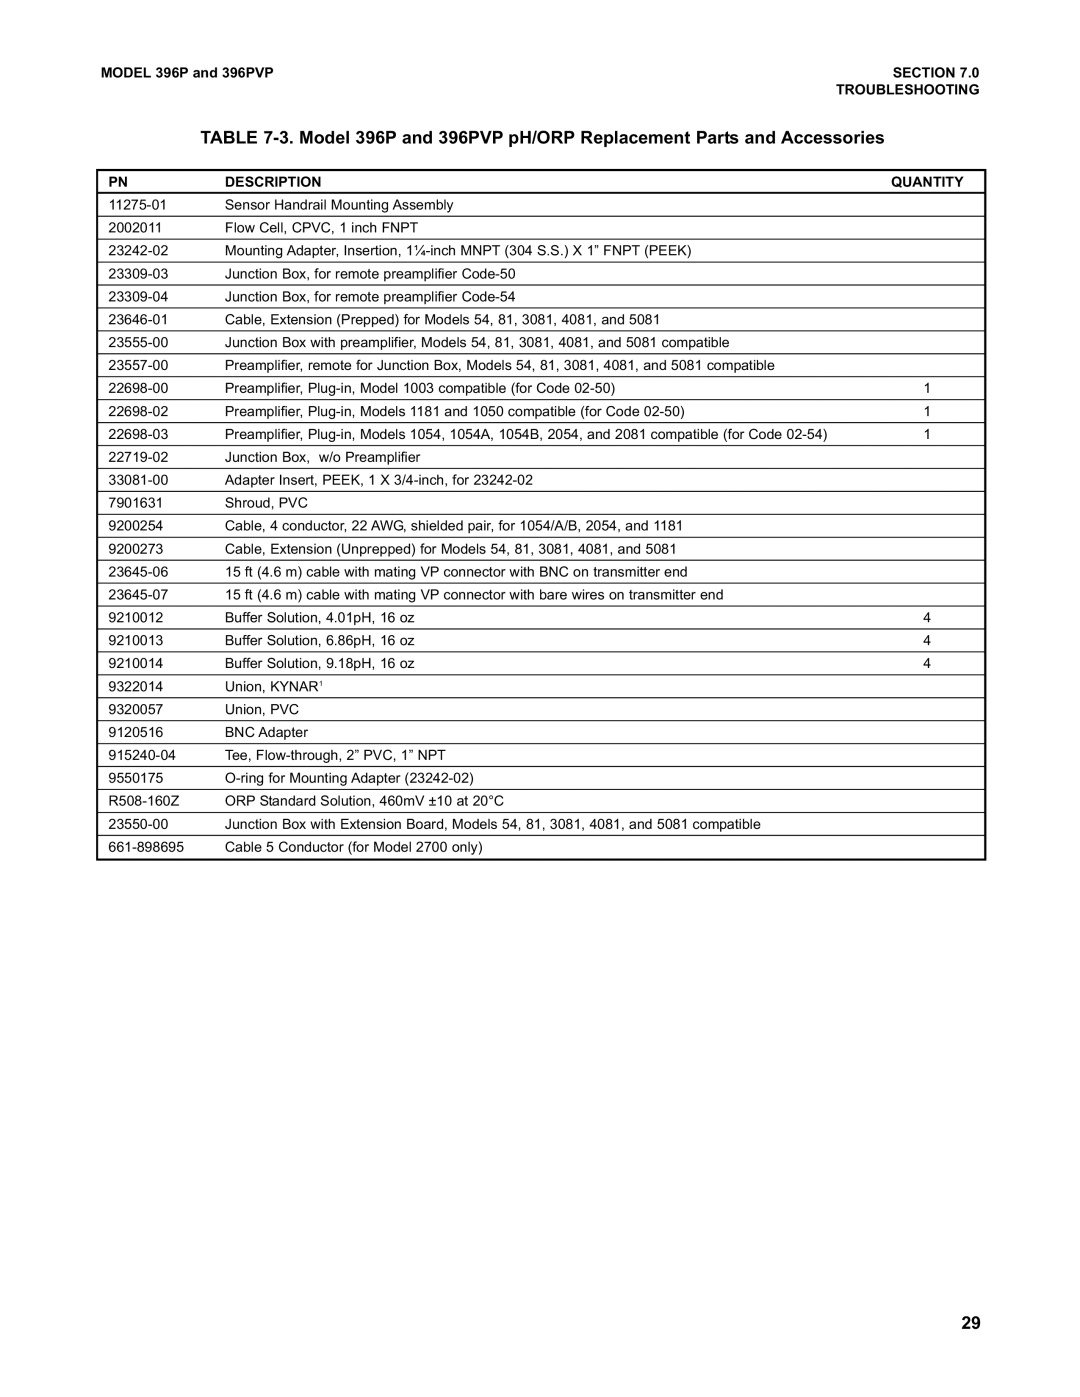 Emerson Process Management instruction manual MODEL 396P and 396PVP, Section, Troubleshooting, Description, Quantity 